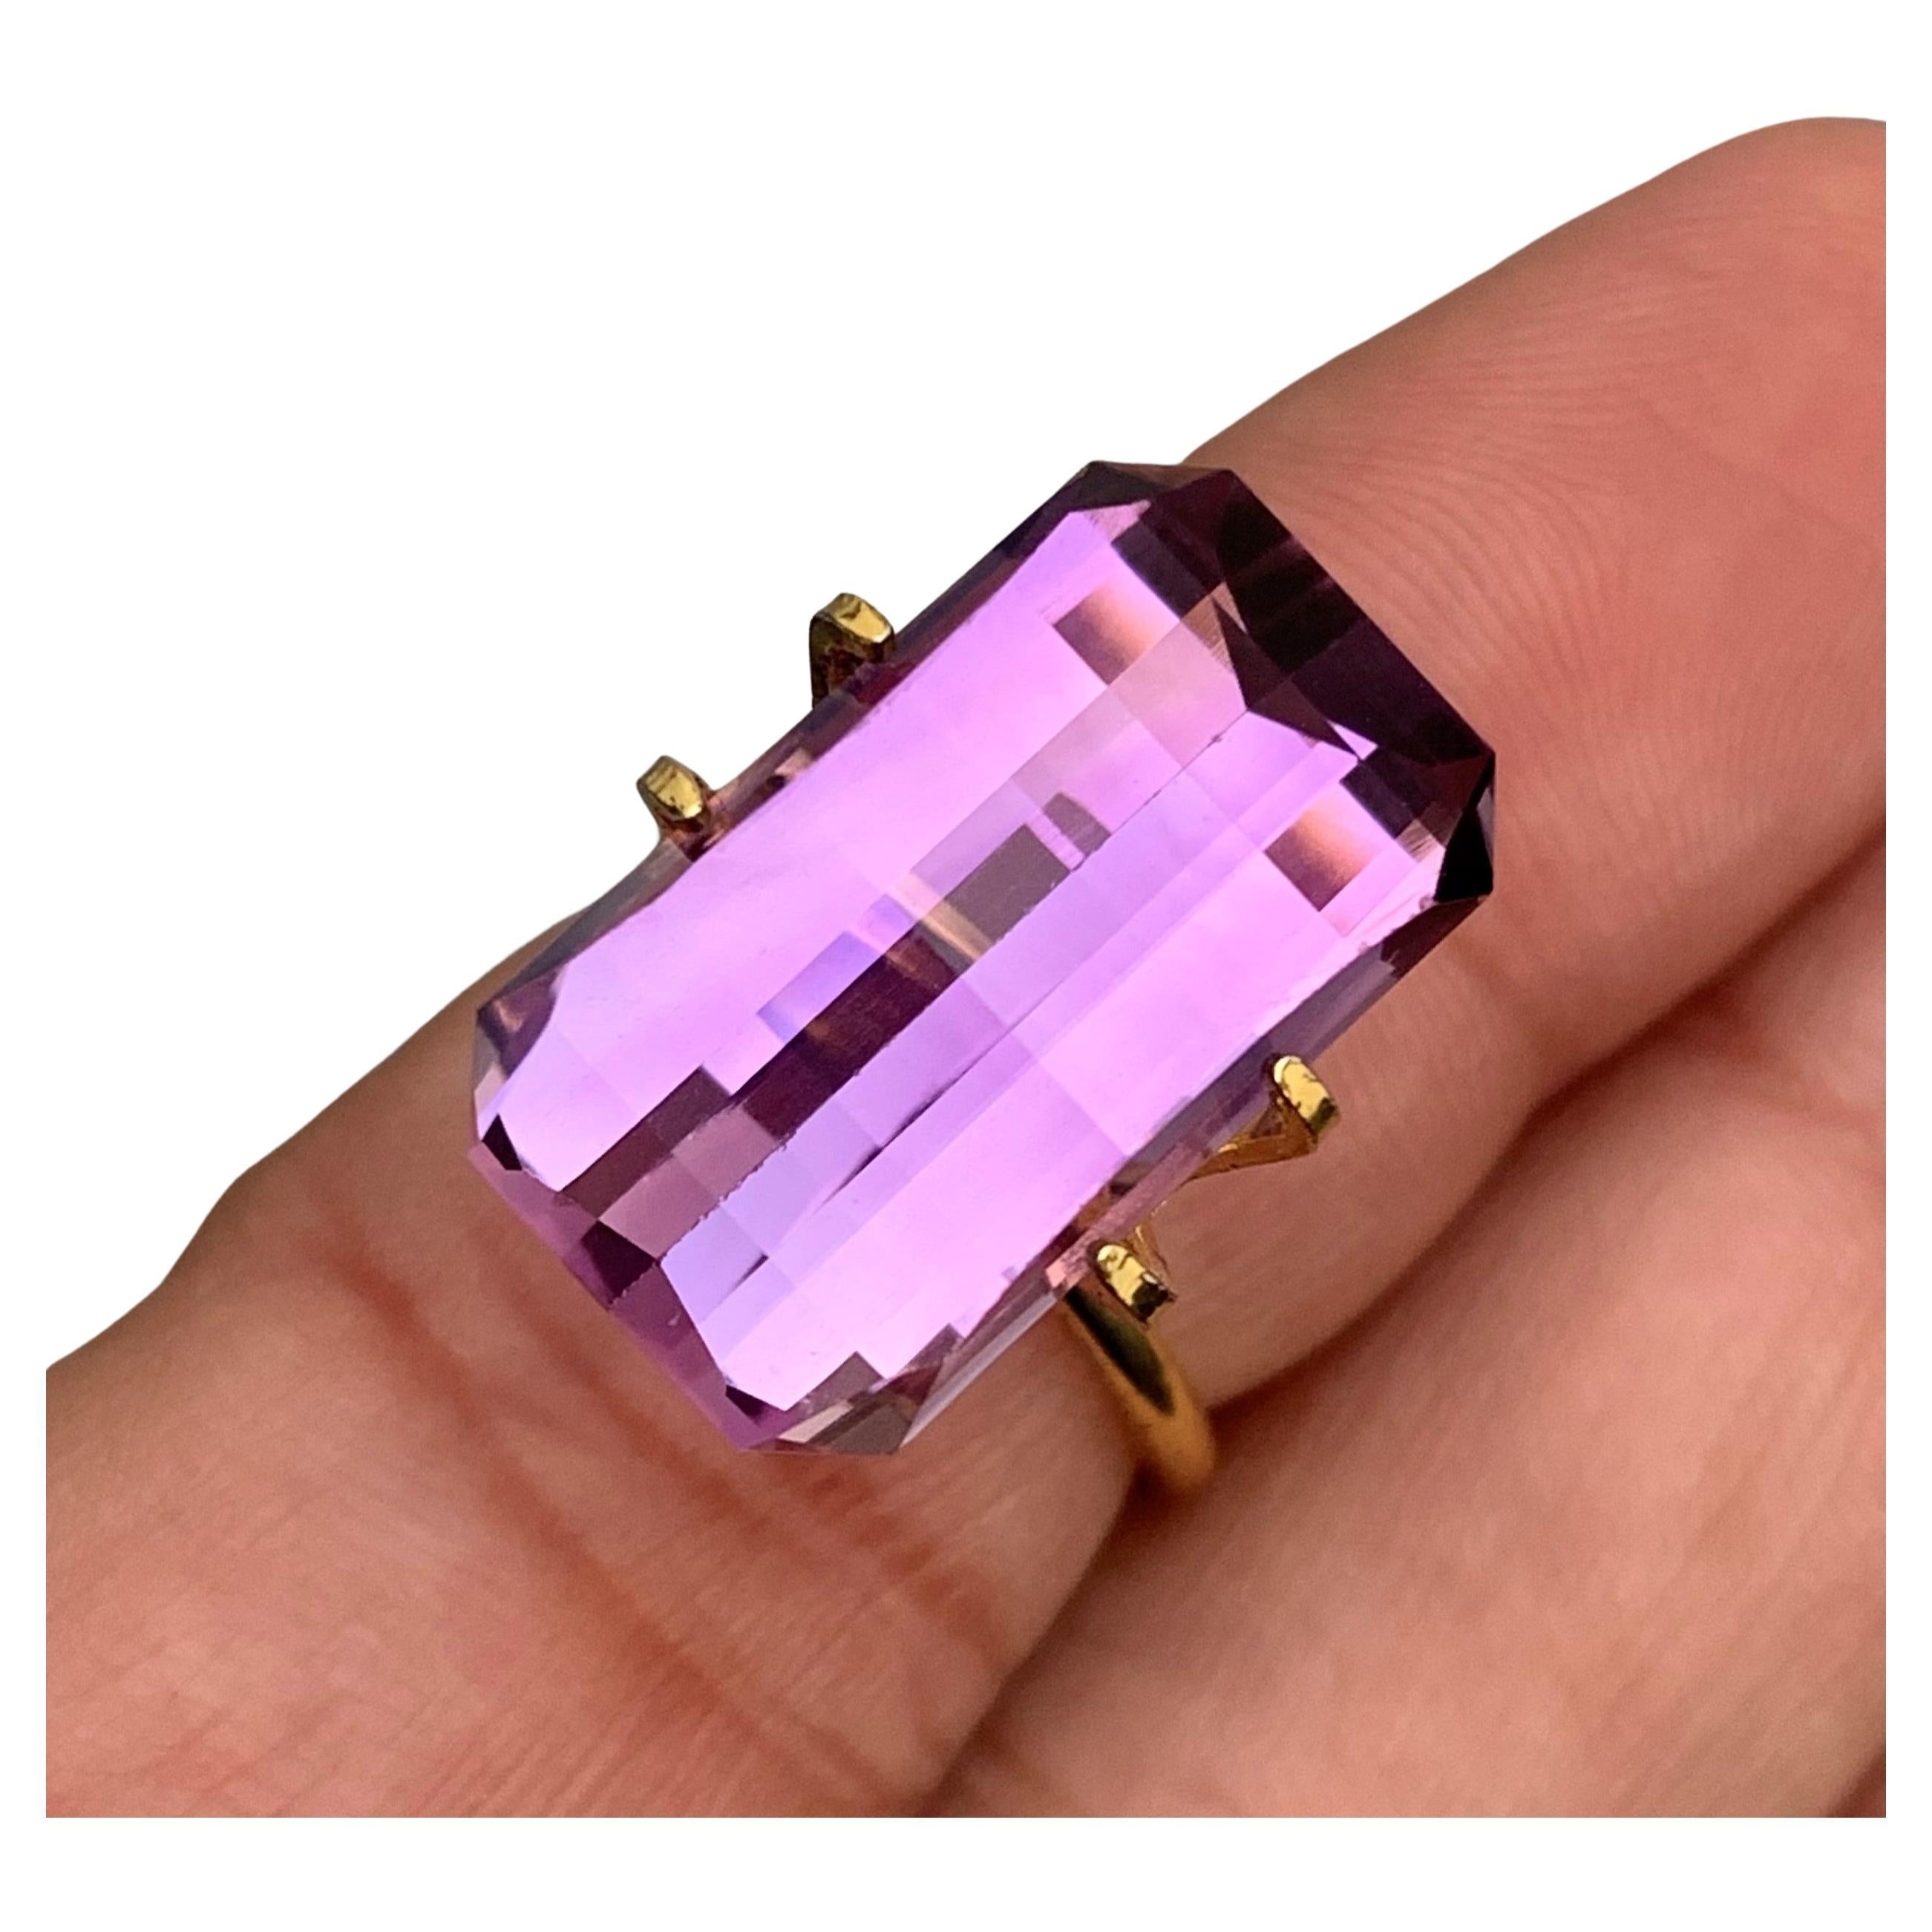 14.20 Carat Pixel Cut Natural Loose Purple Amethyst Gem from Brazil